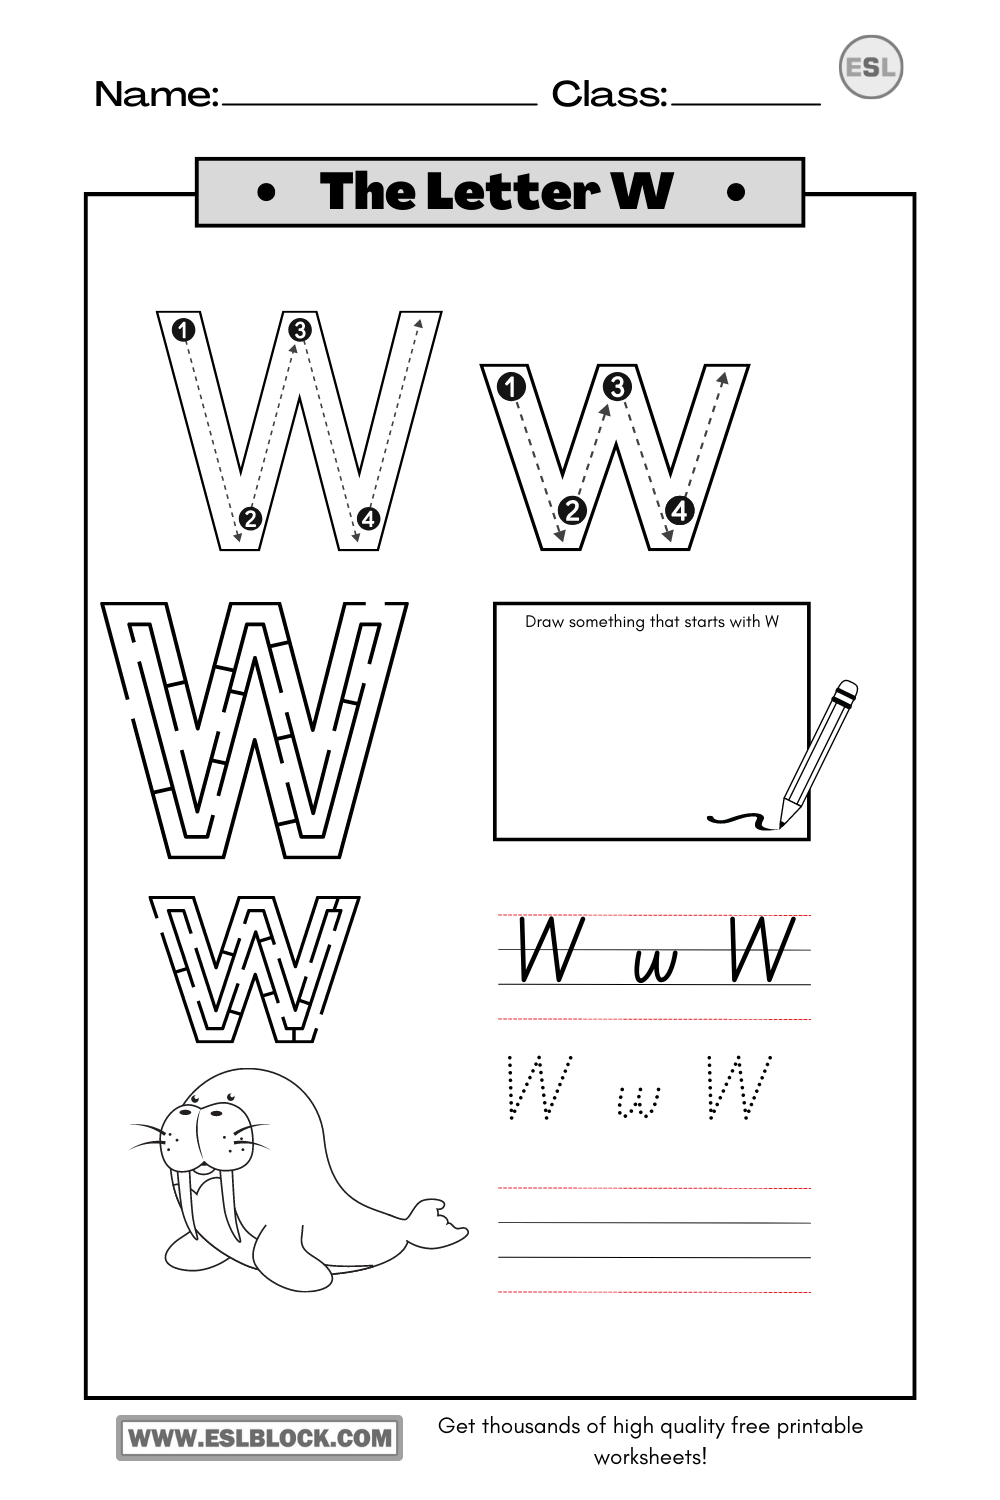 Alphabet W Printable Worksheets, Free Worksheets, Kindergarten Worksheets, Letter W Printable Worksheets, Preschool Worksheets, Tracing the Letter W, Tracing the letter W Printable, Tracing the Letter W Worksheets, Tracing Worksheets, Worksheets